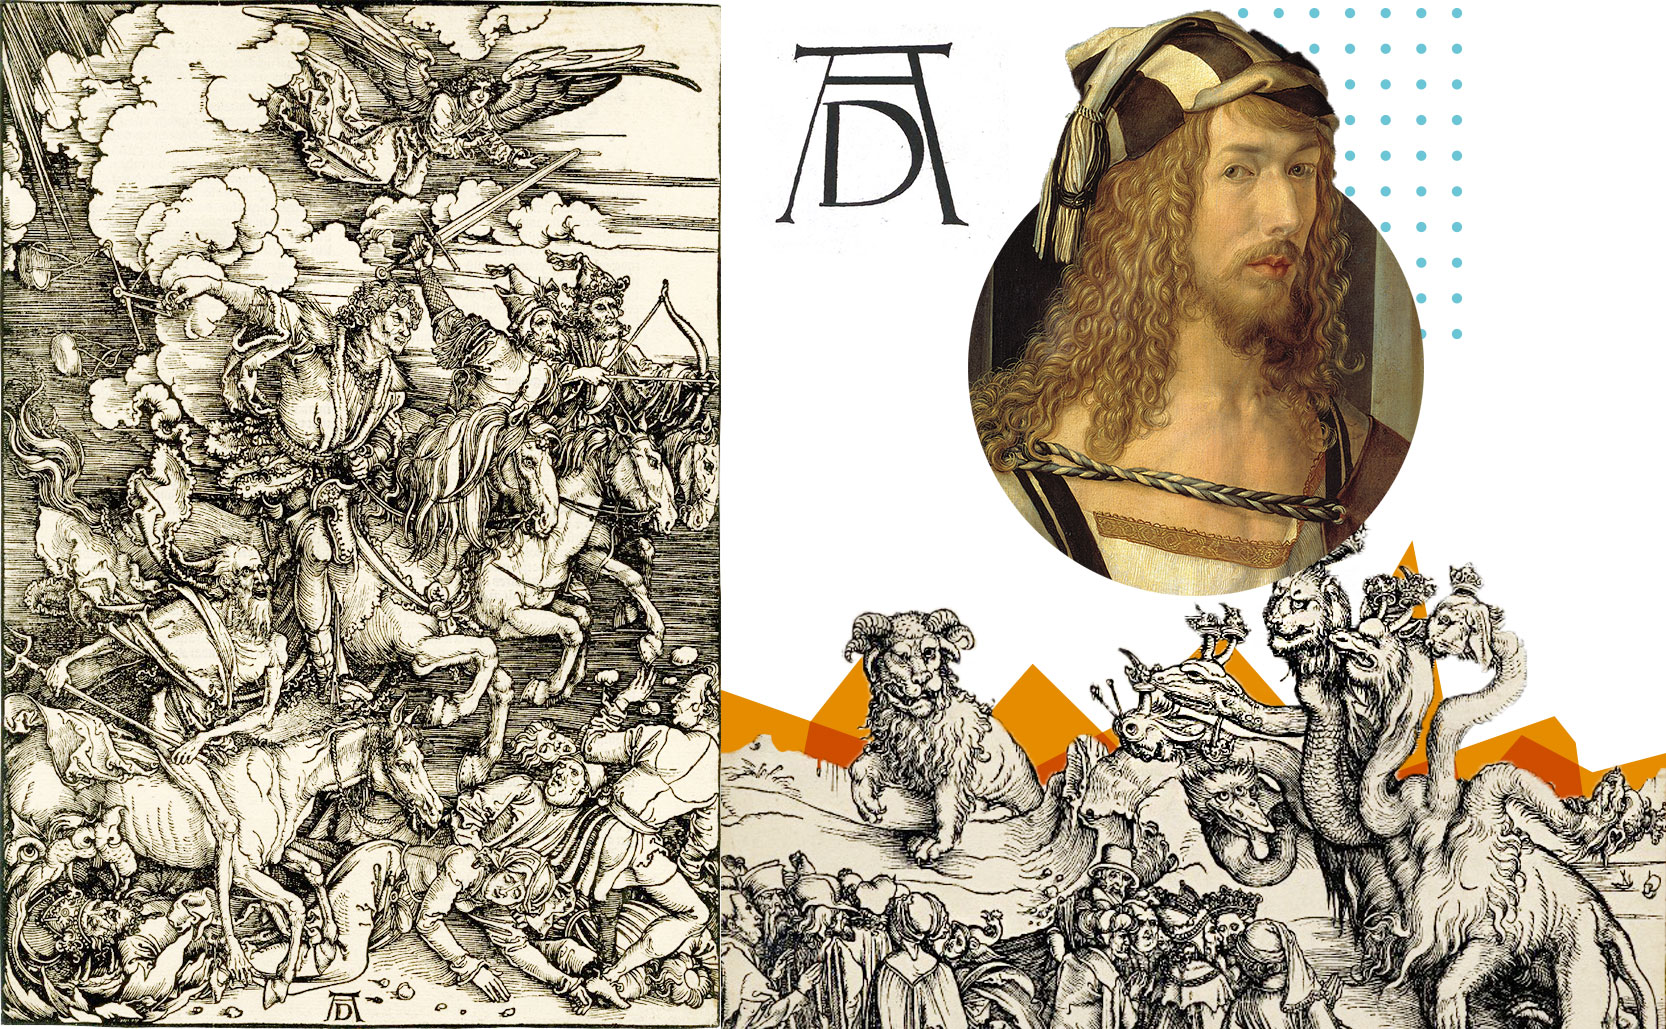 Albrecht Dürer's Apocalypse series